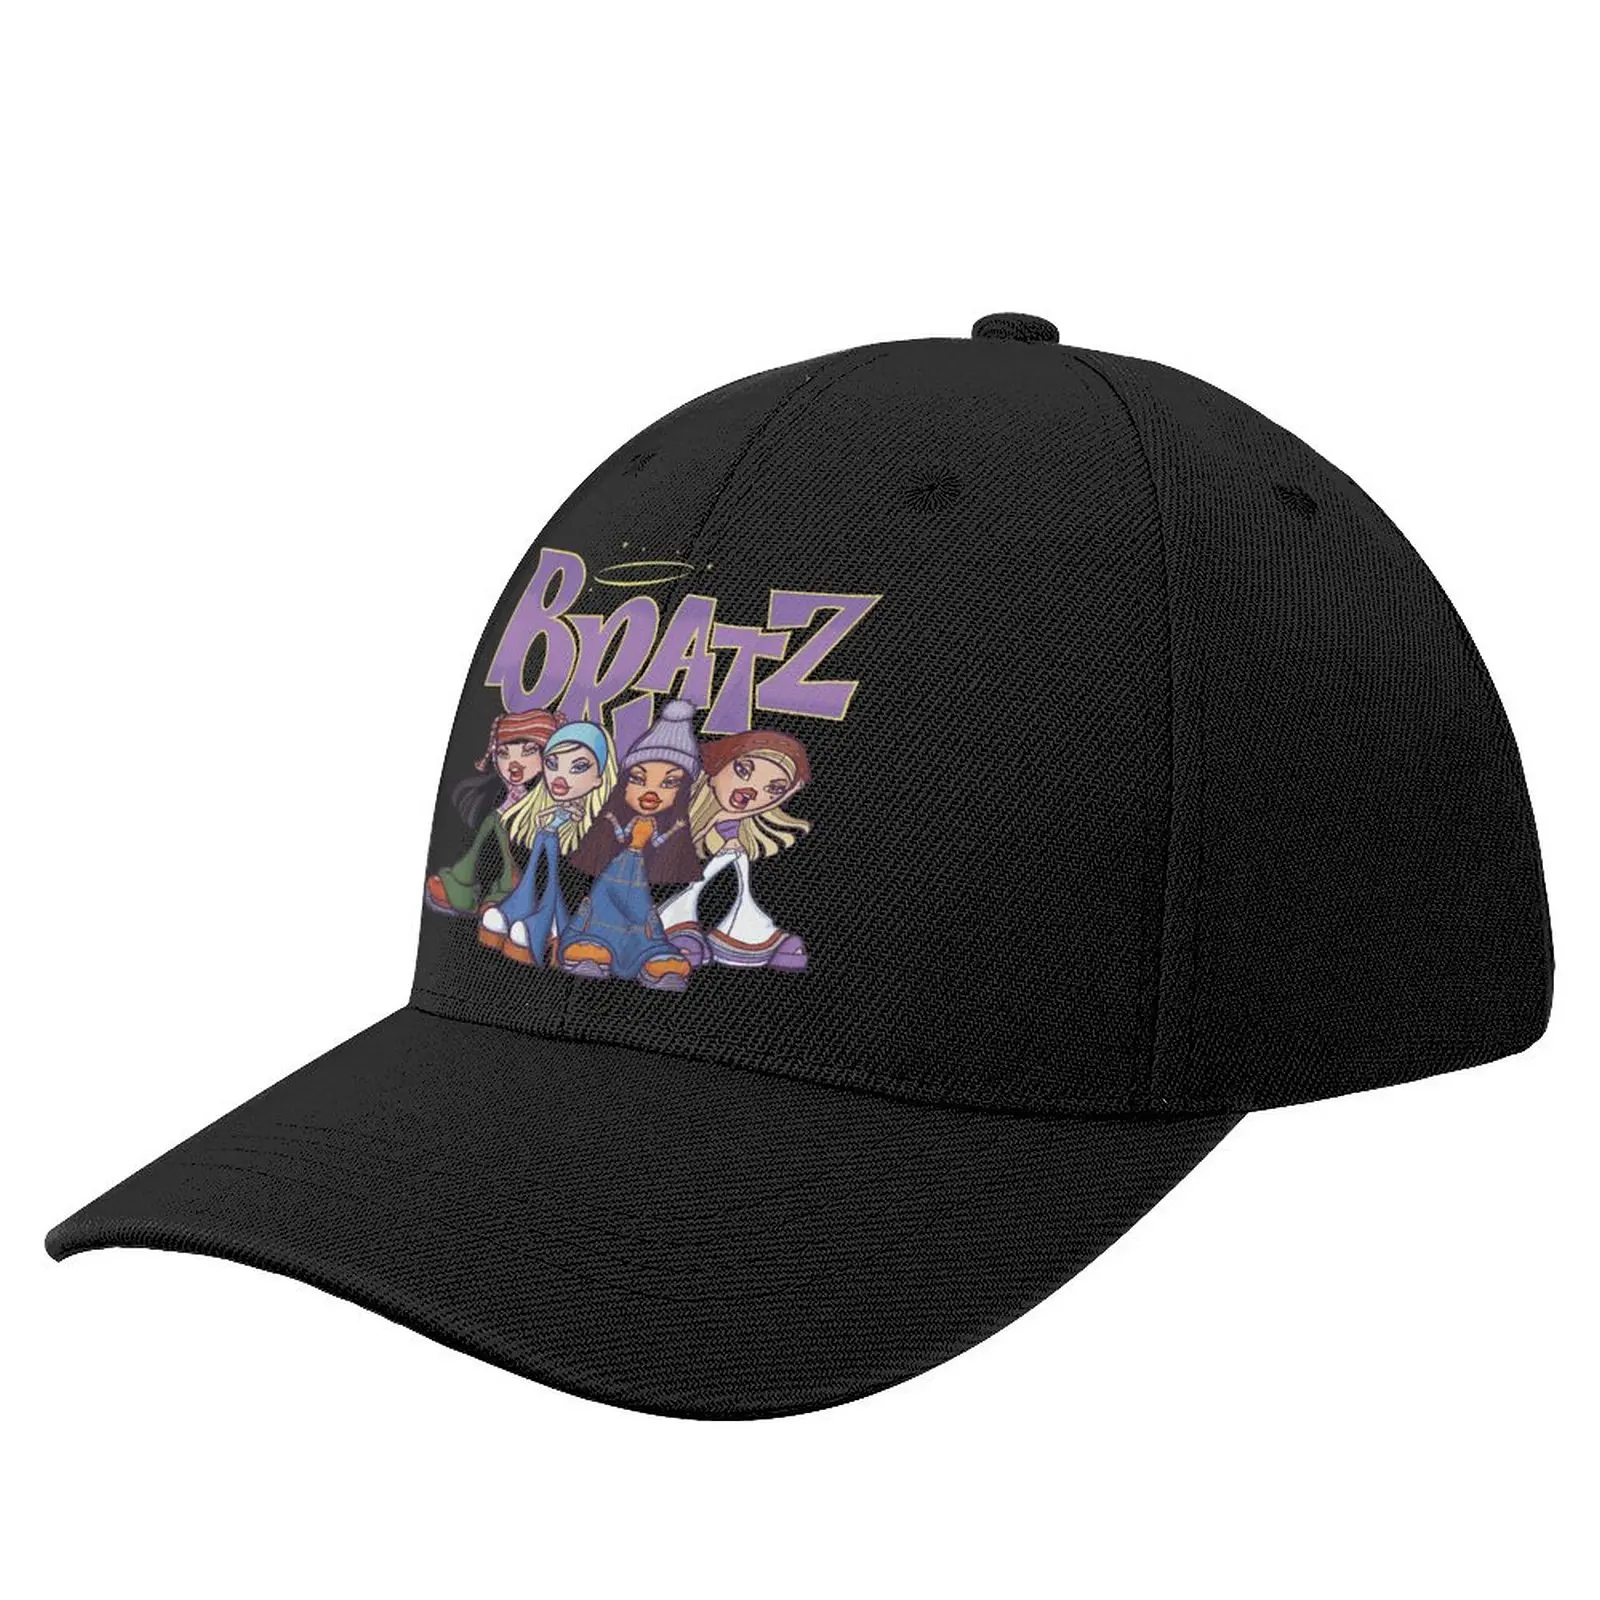 

Bratz Original Four Group Shot Logo Baseball Cap Doll Makeup Angel Style Feminsim Fashion Cool Man Hip Hop Hats Running Caps